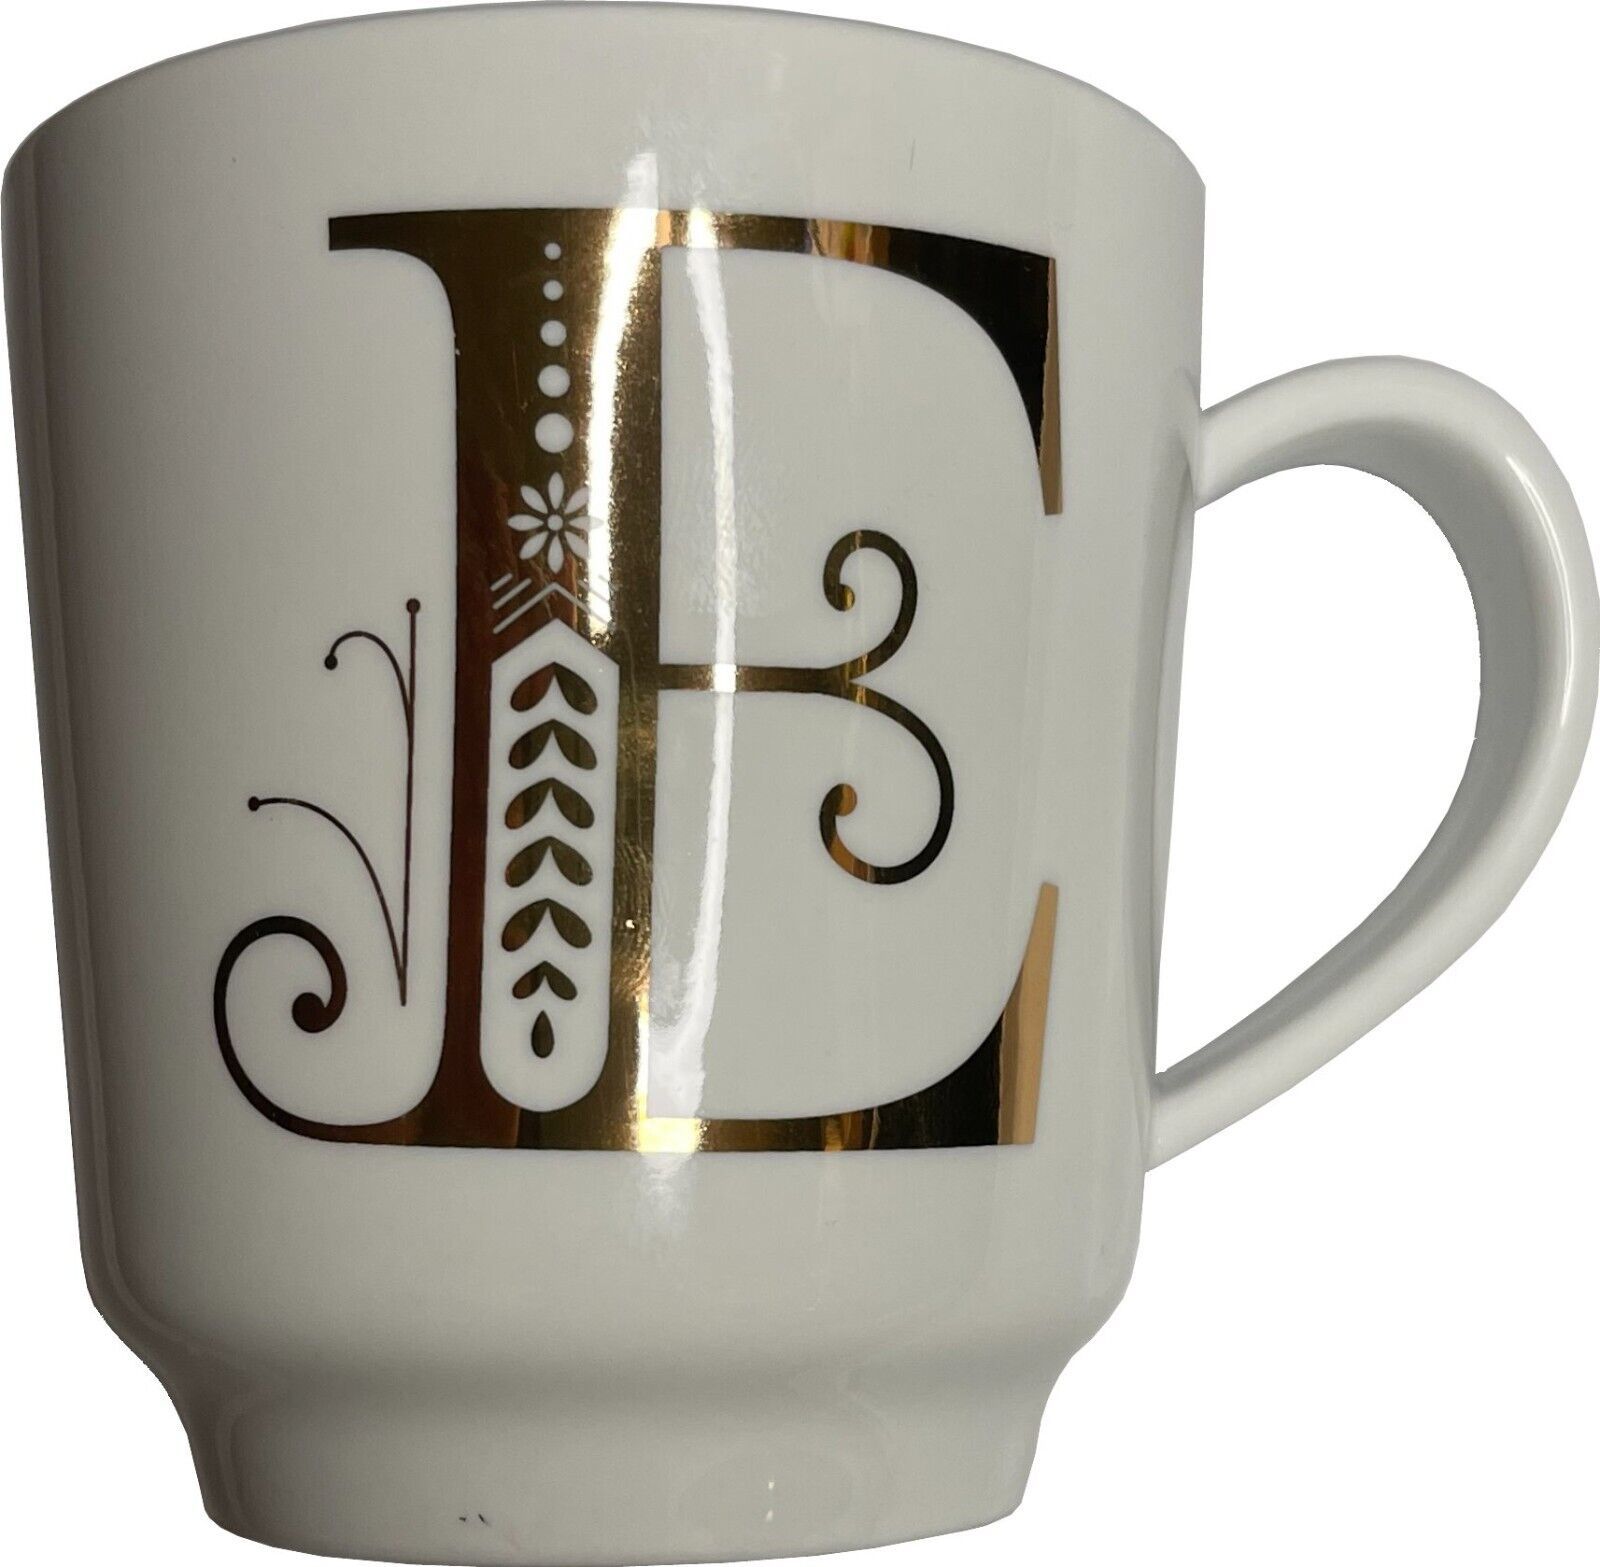 Nordstrom At Home E Monogram Initial White Coffee Tea Mug Porcelain - $22.99